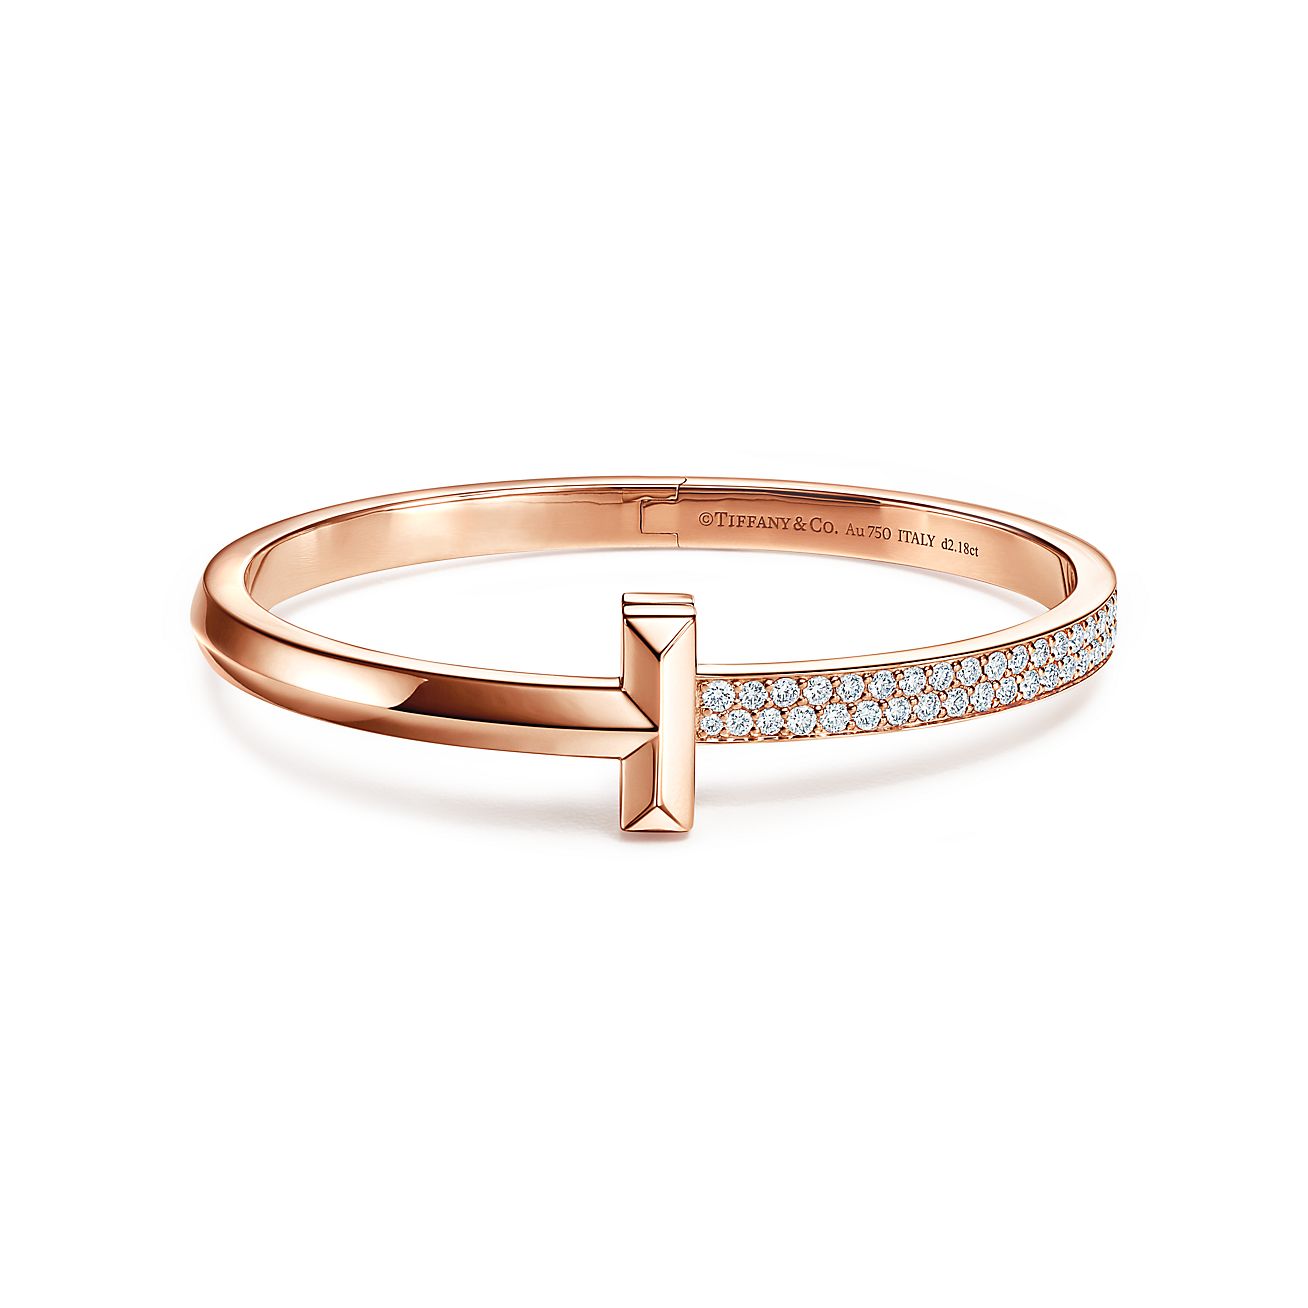 tiffany bangle bracelet with diamonds